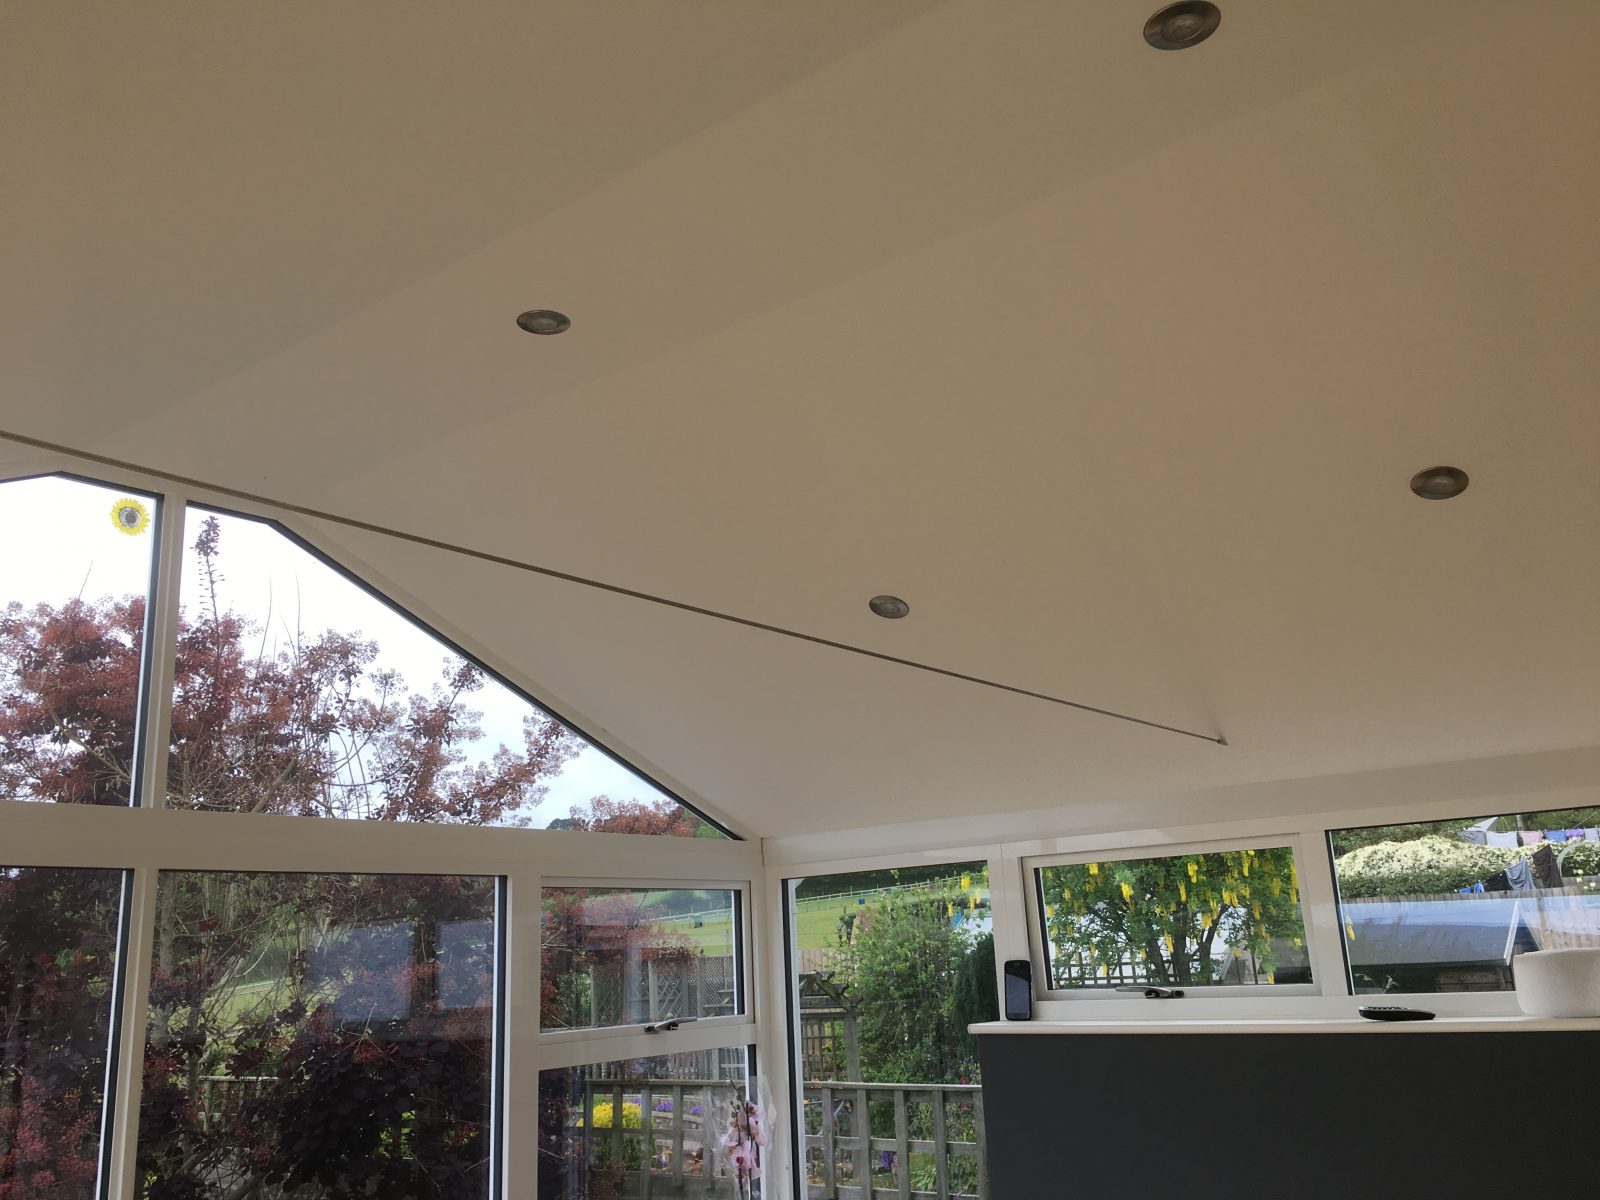 Hewlett case study, aluminium conservatory with SupaLite roof